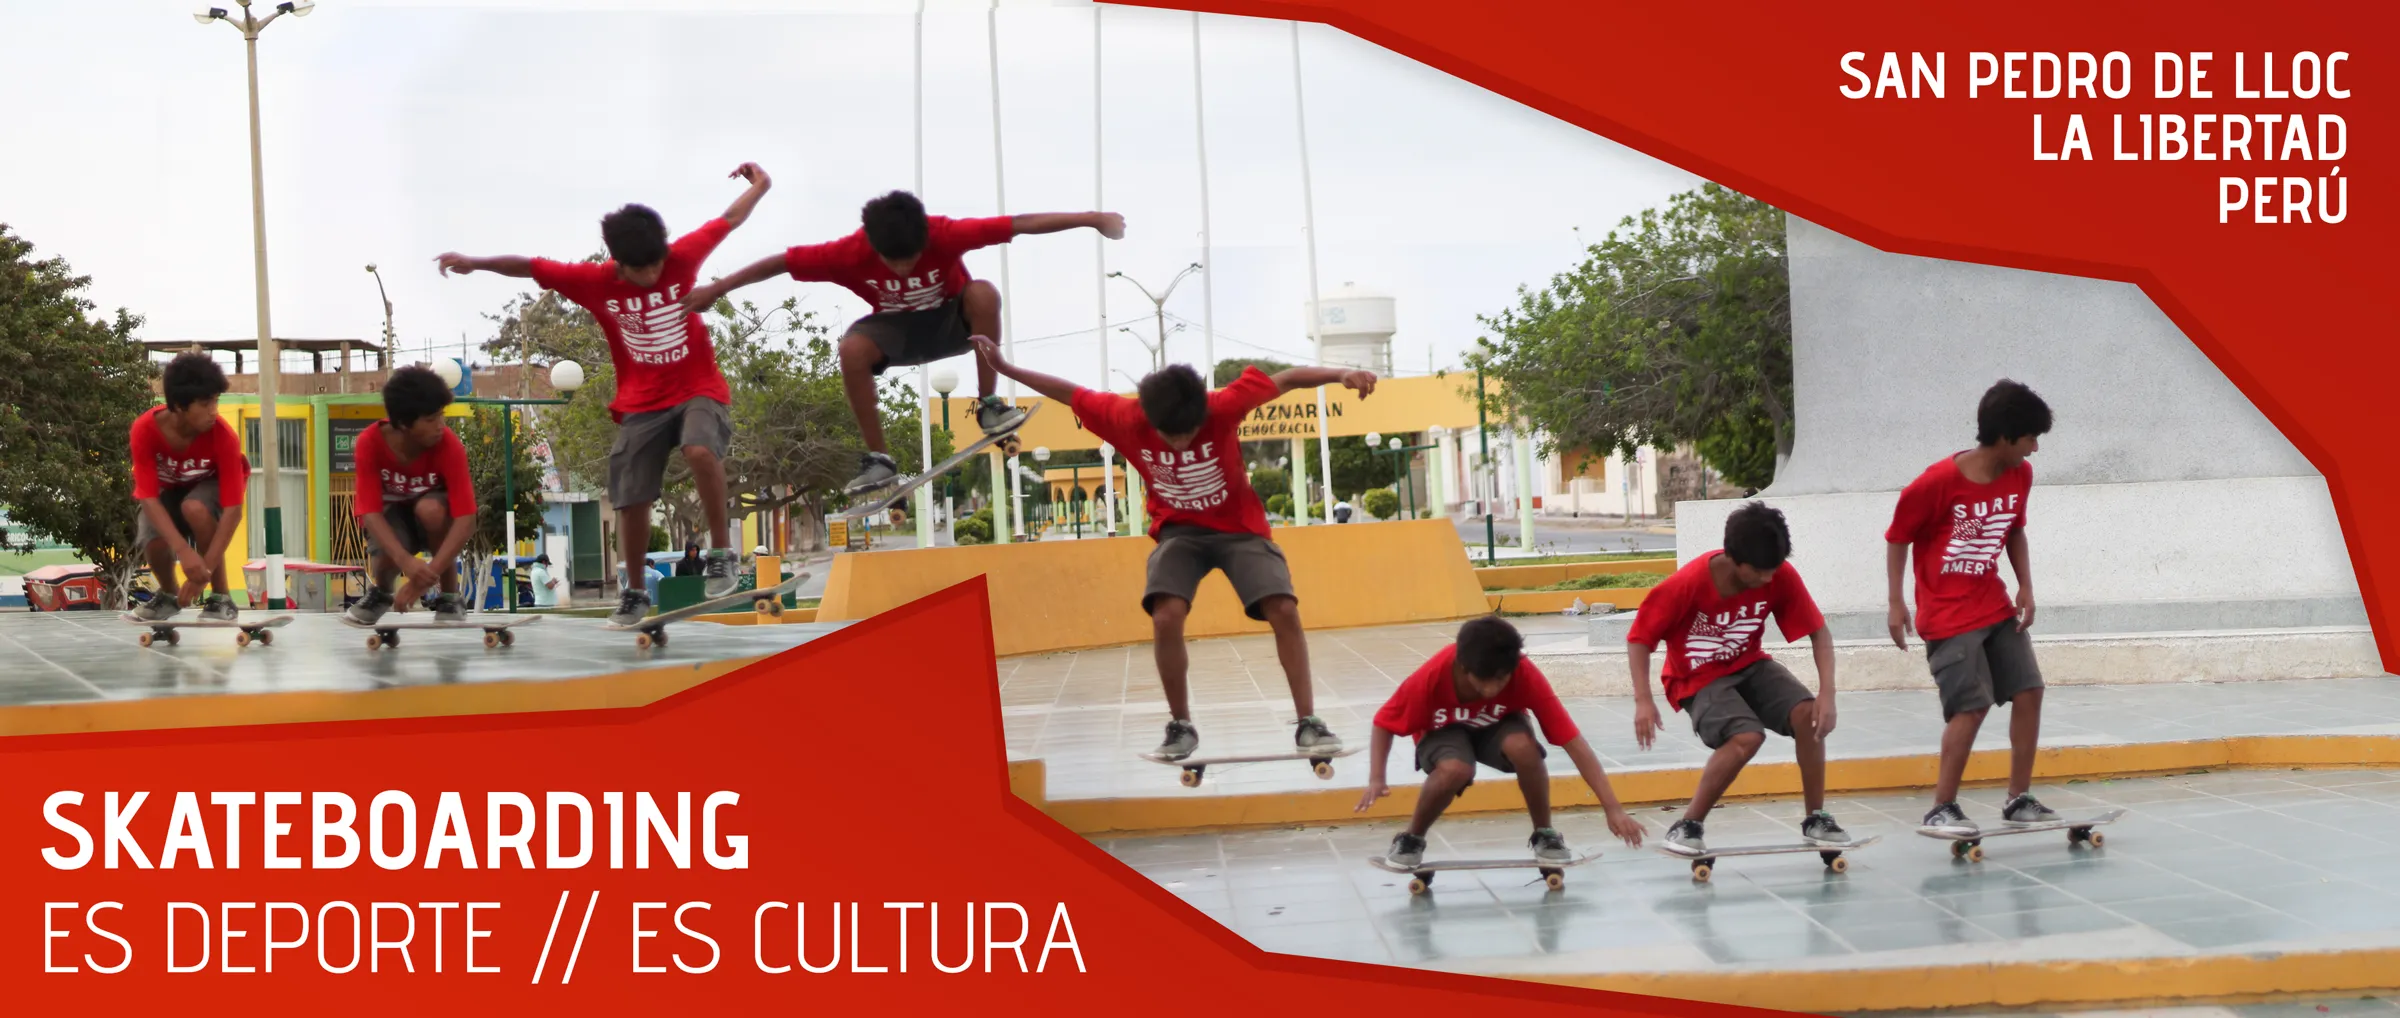 Skateboarding es cultura - banner 2